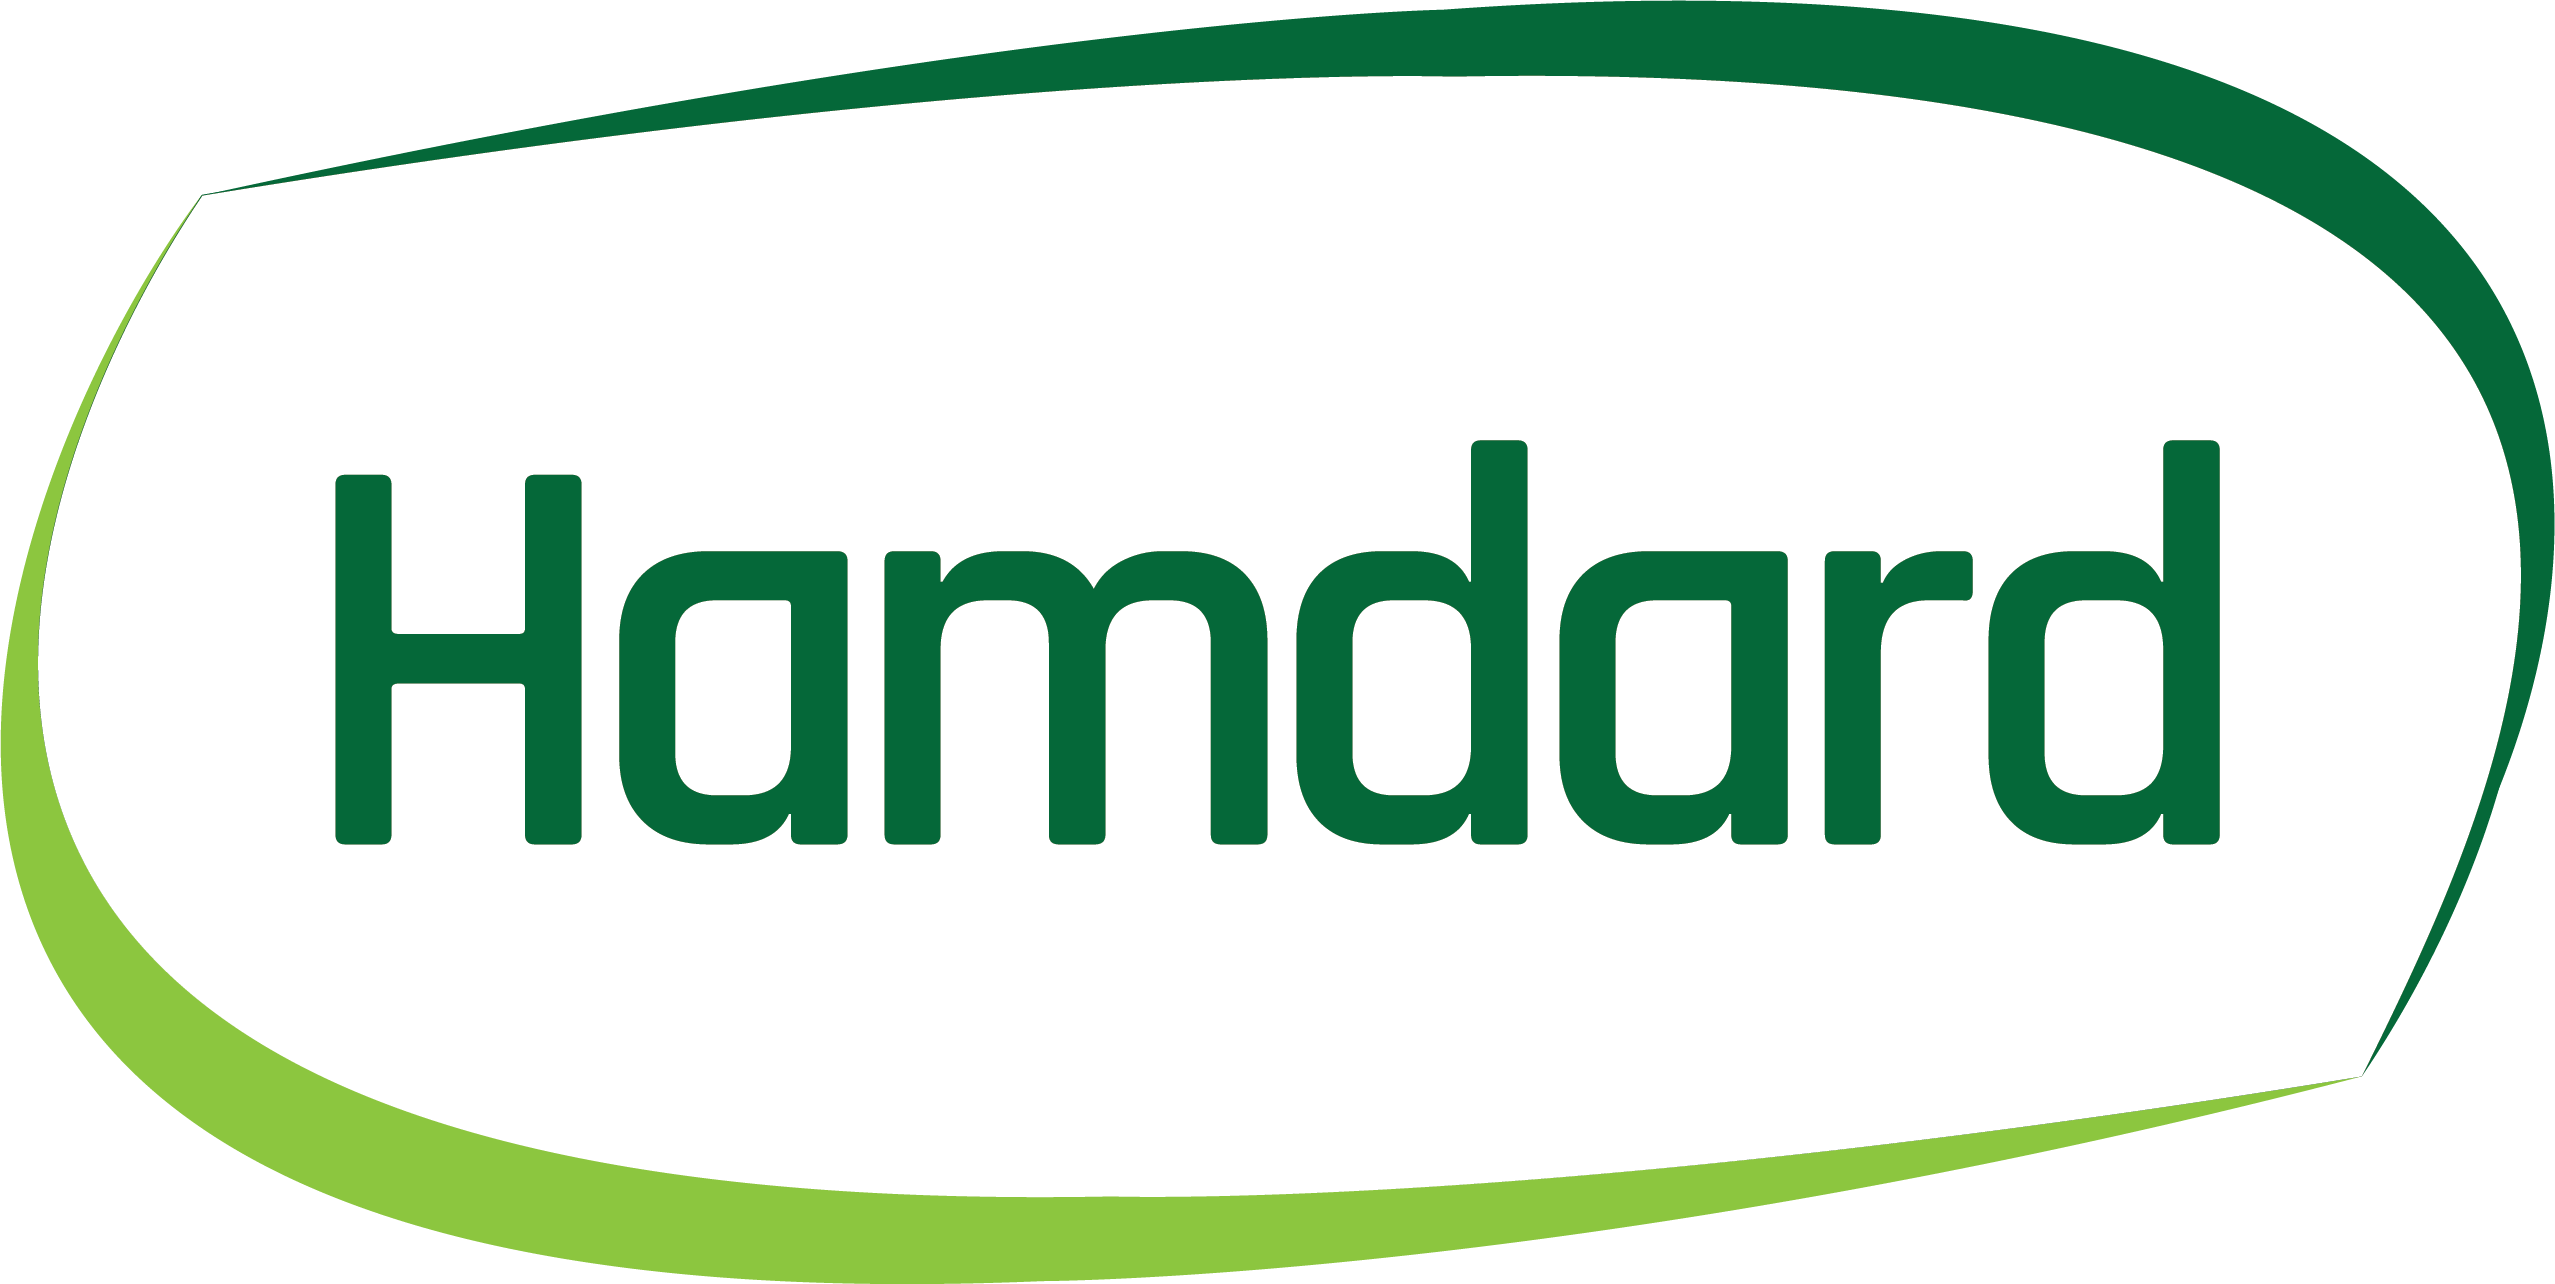 Hamdard Logos with Ground